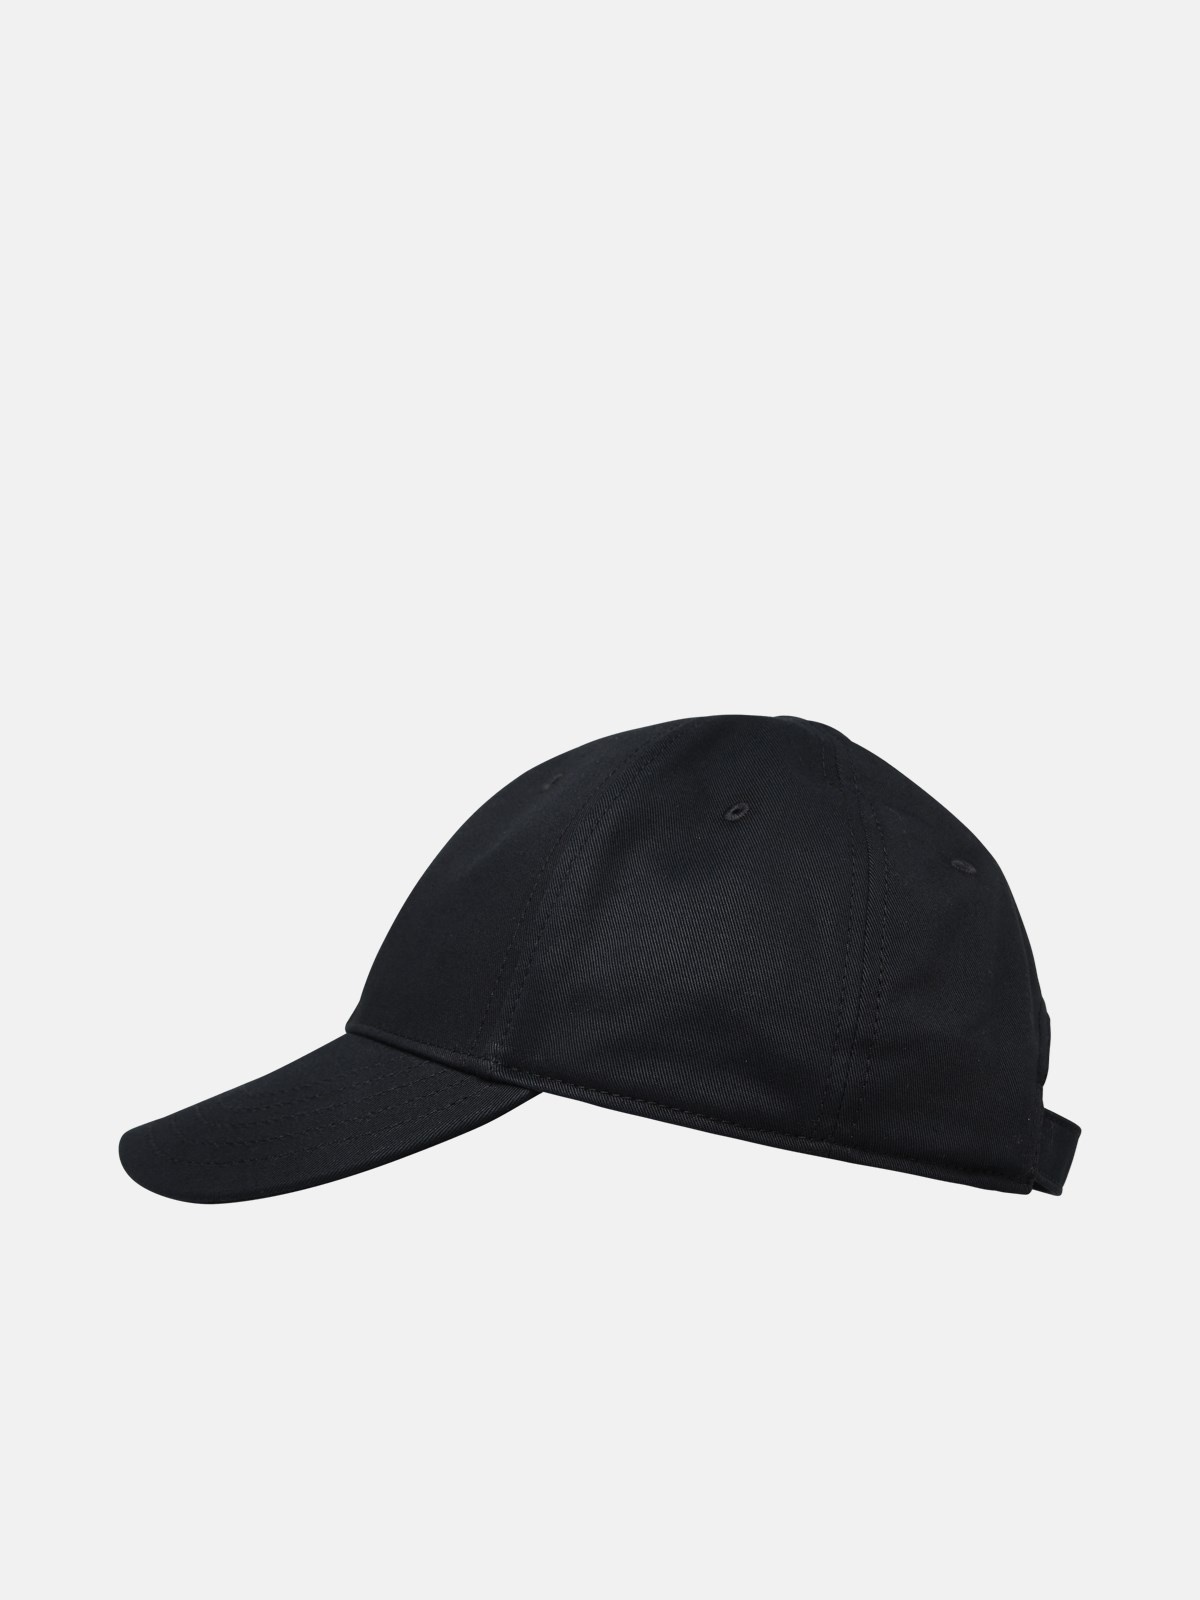 Black cotton Drill hat - 2